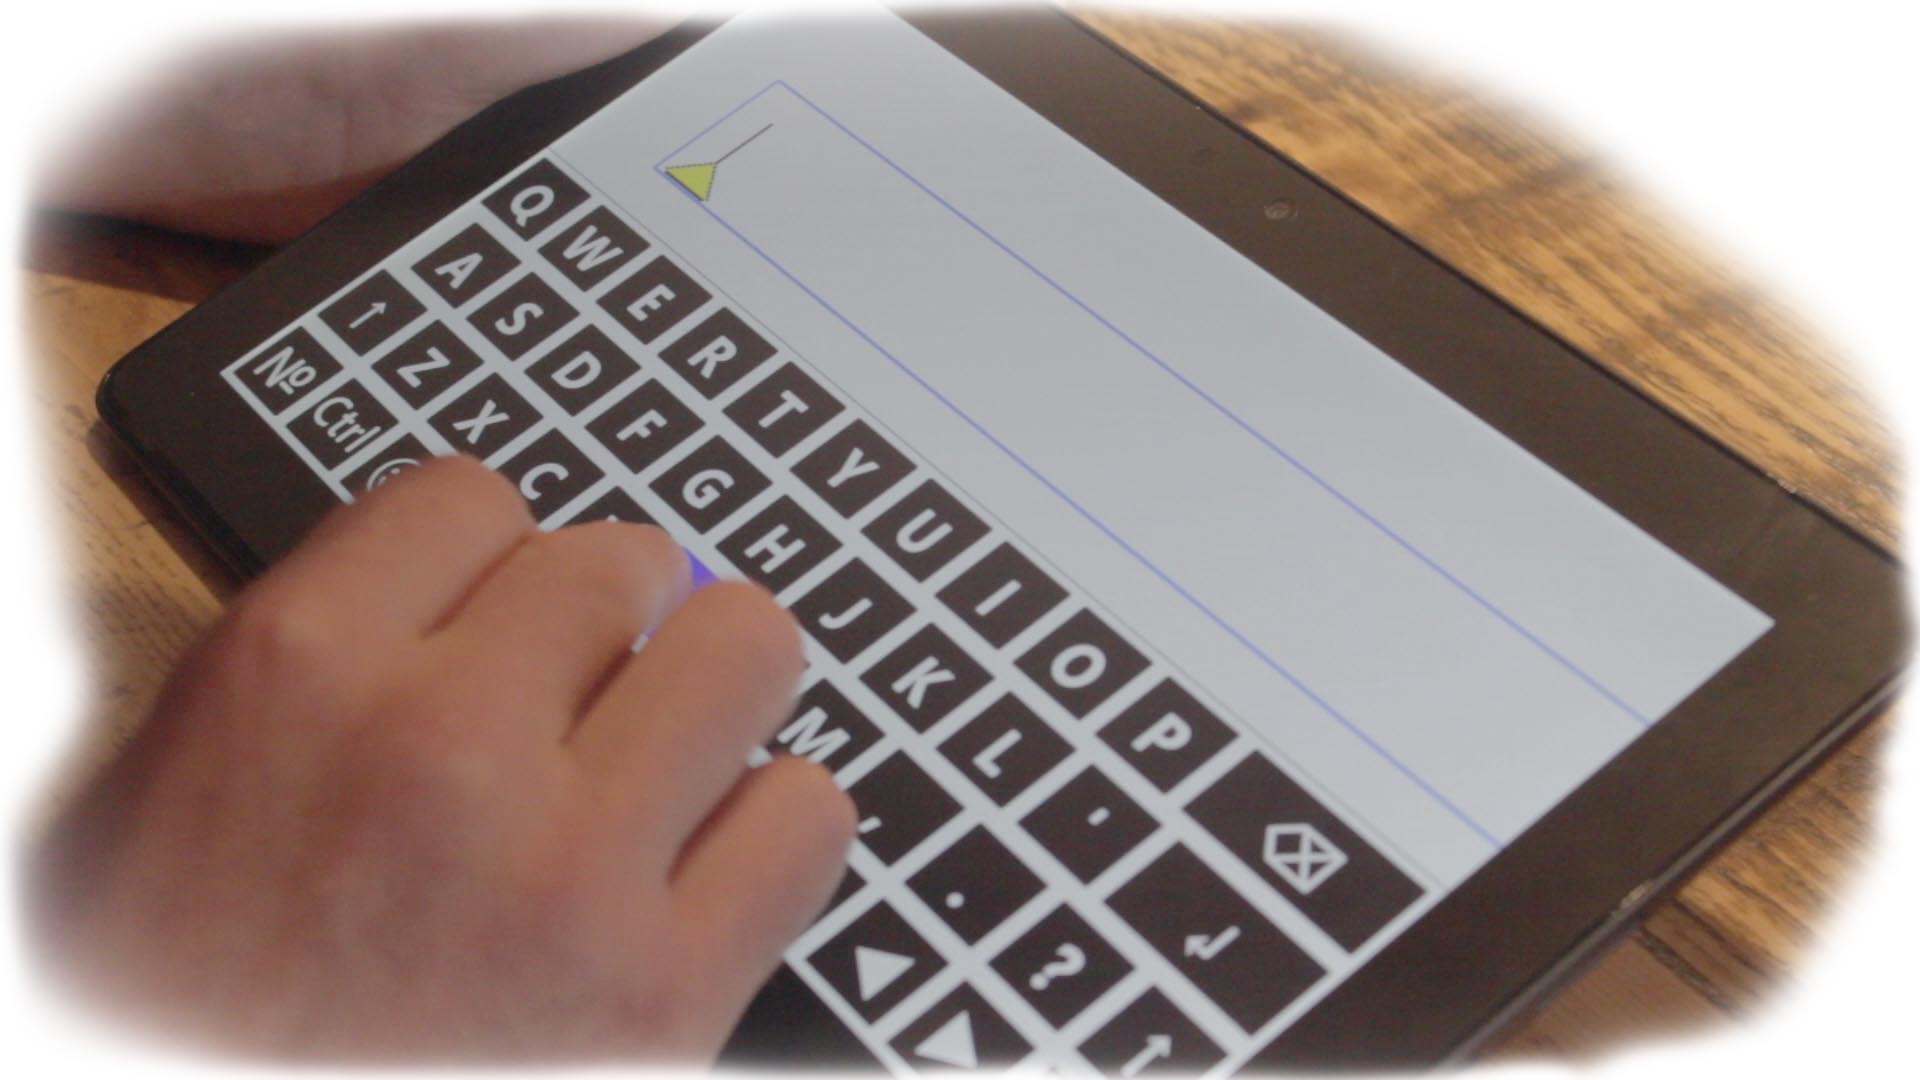 SuperNova's touchscreen keyboard